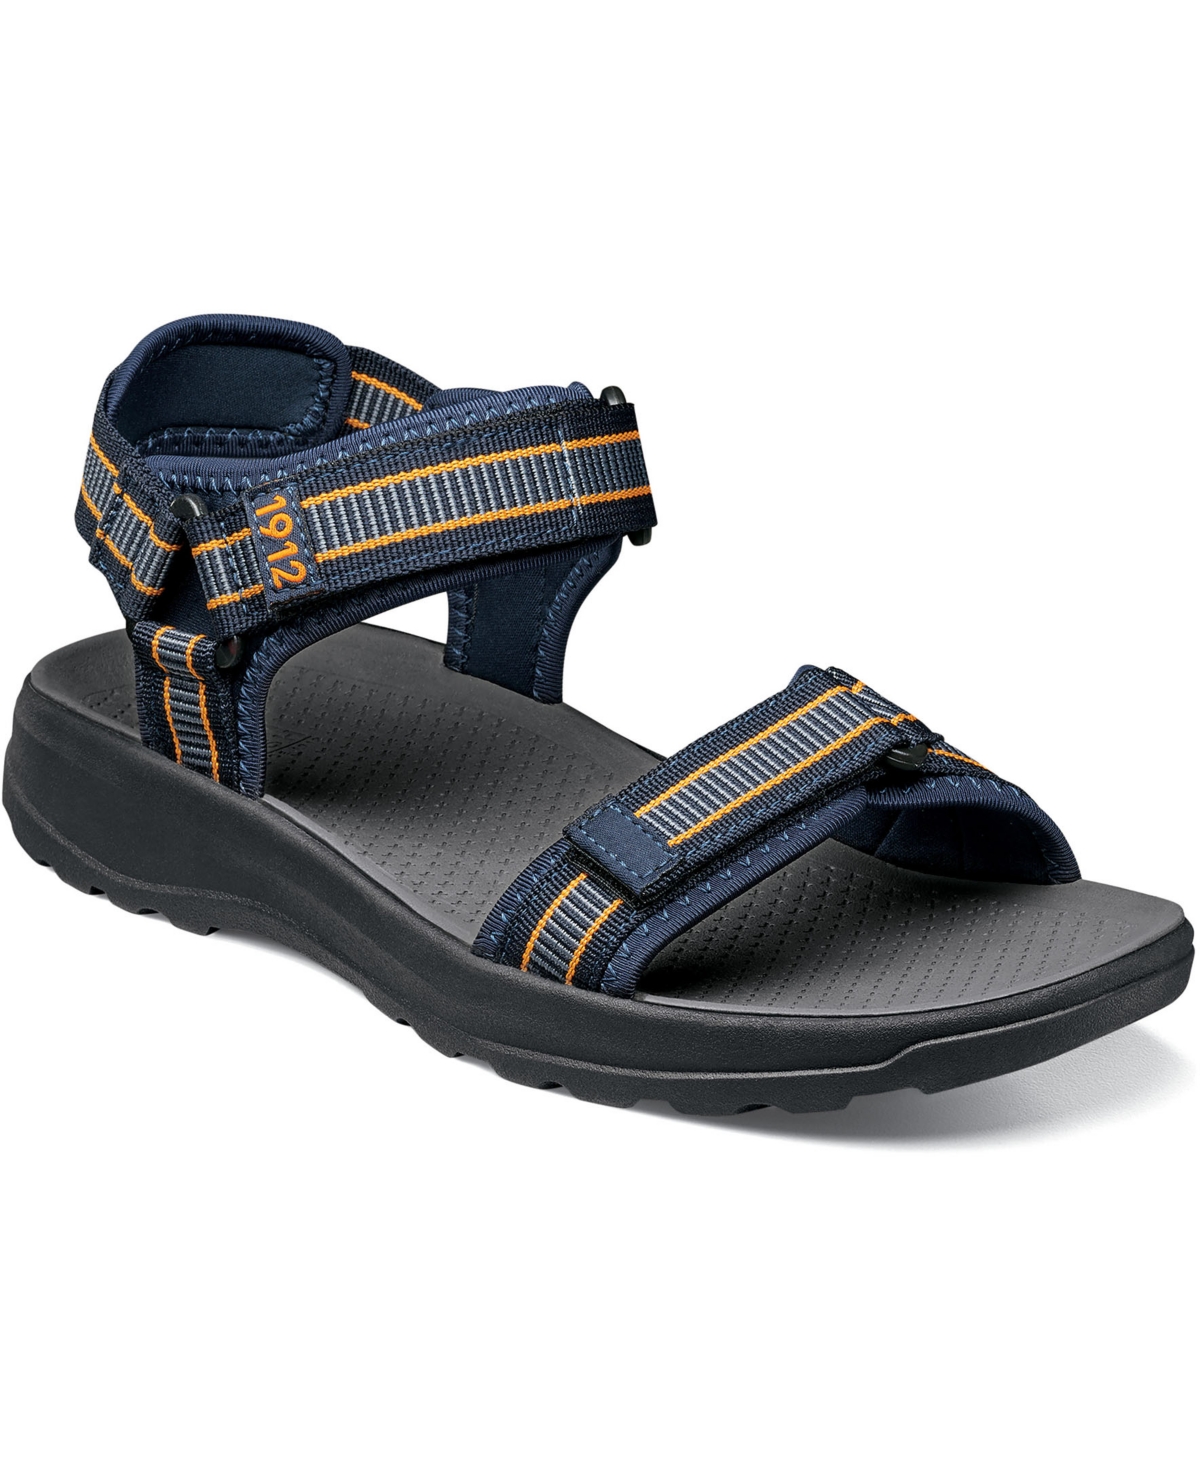 Men's Huck Sport Sandals - Tan Multi